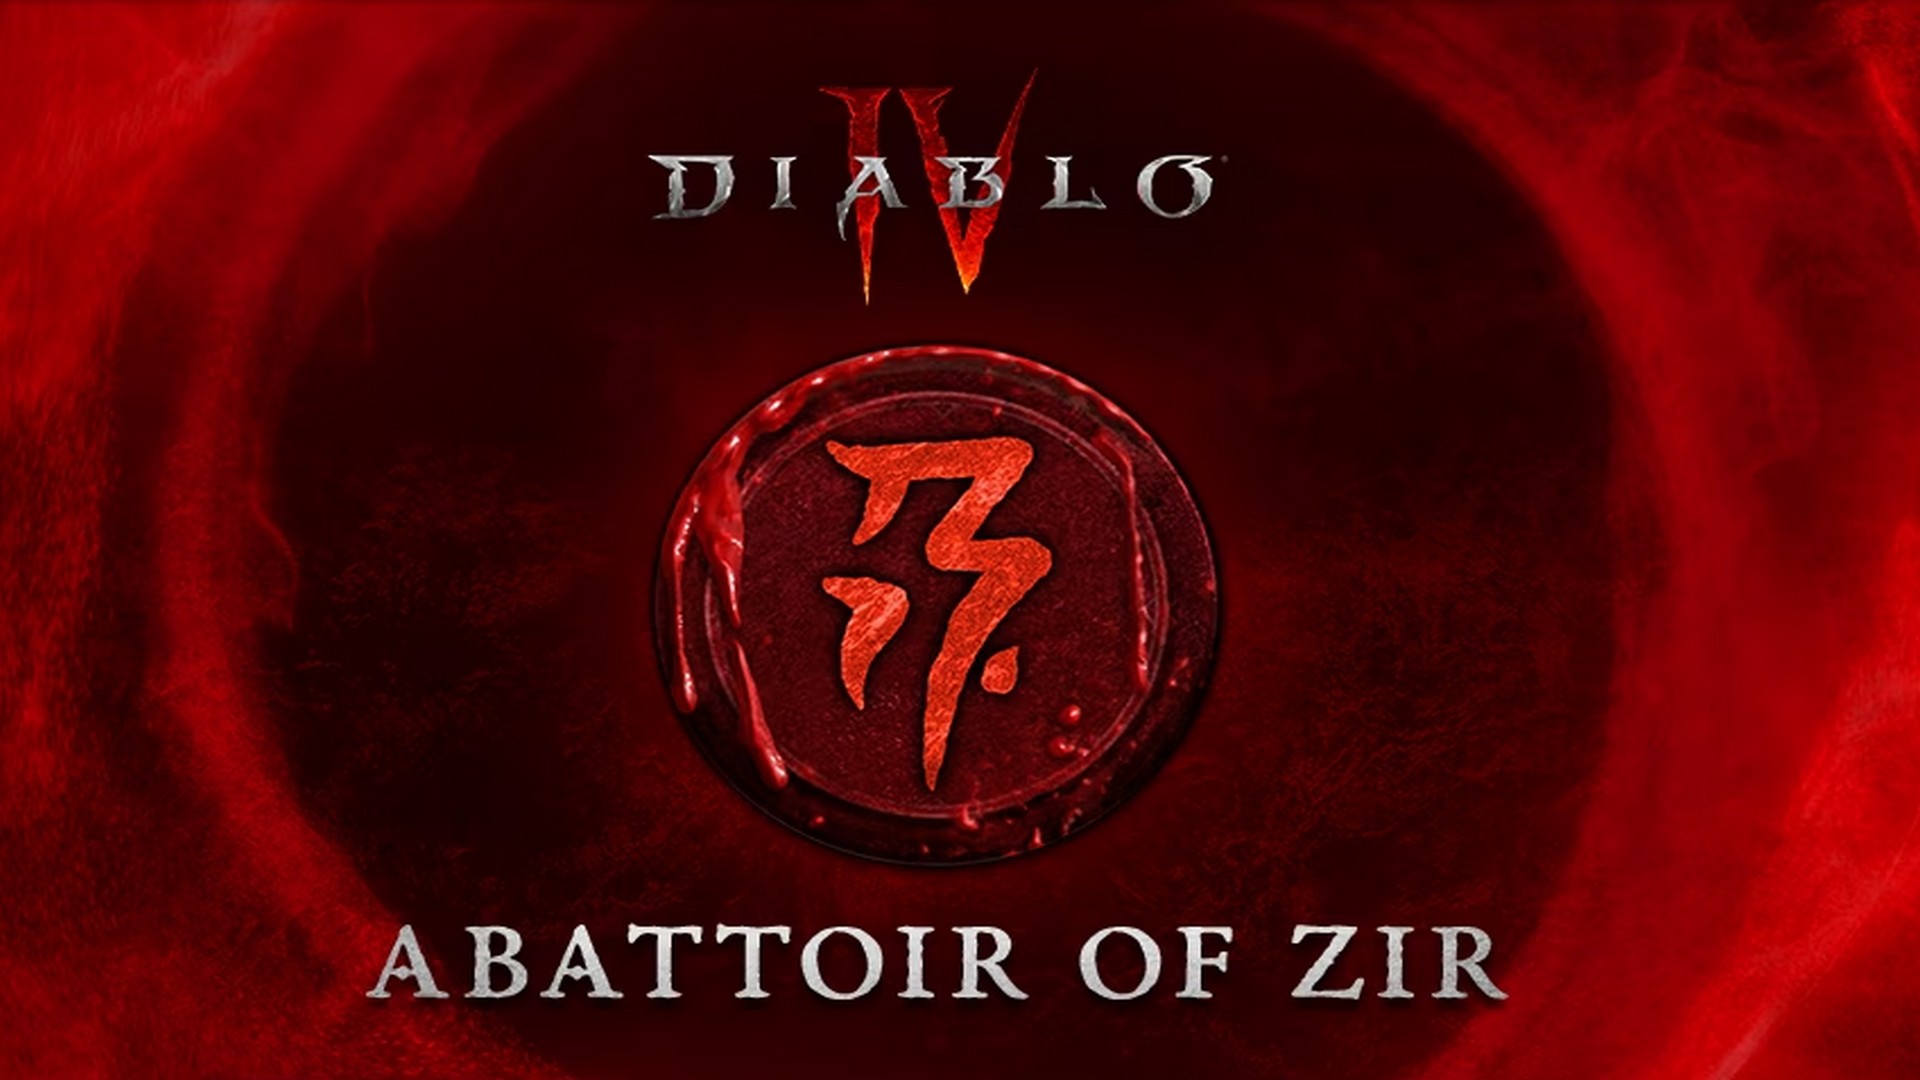 Diablo IV Abattoir Of Zir And More Live In Patch 1.2.3